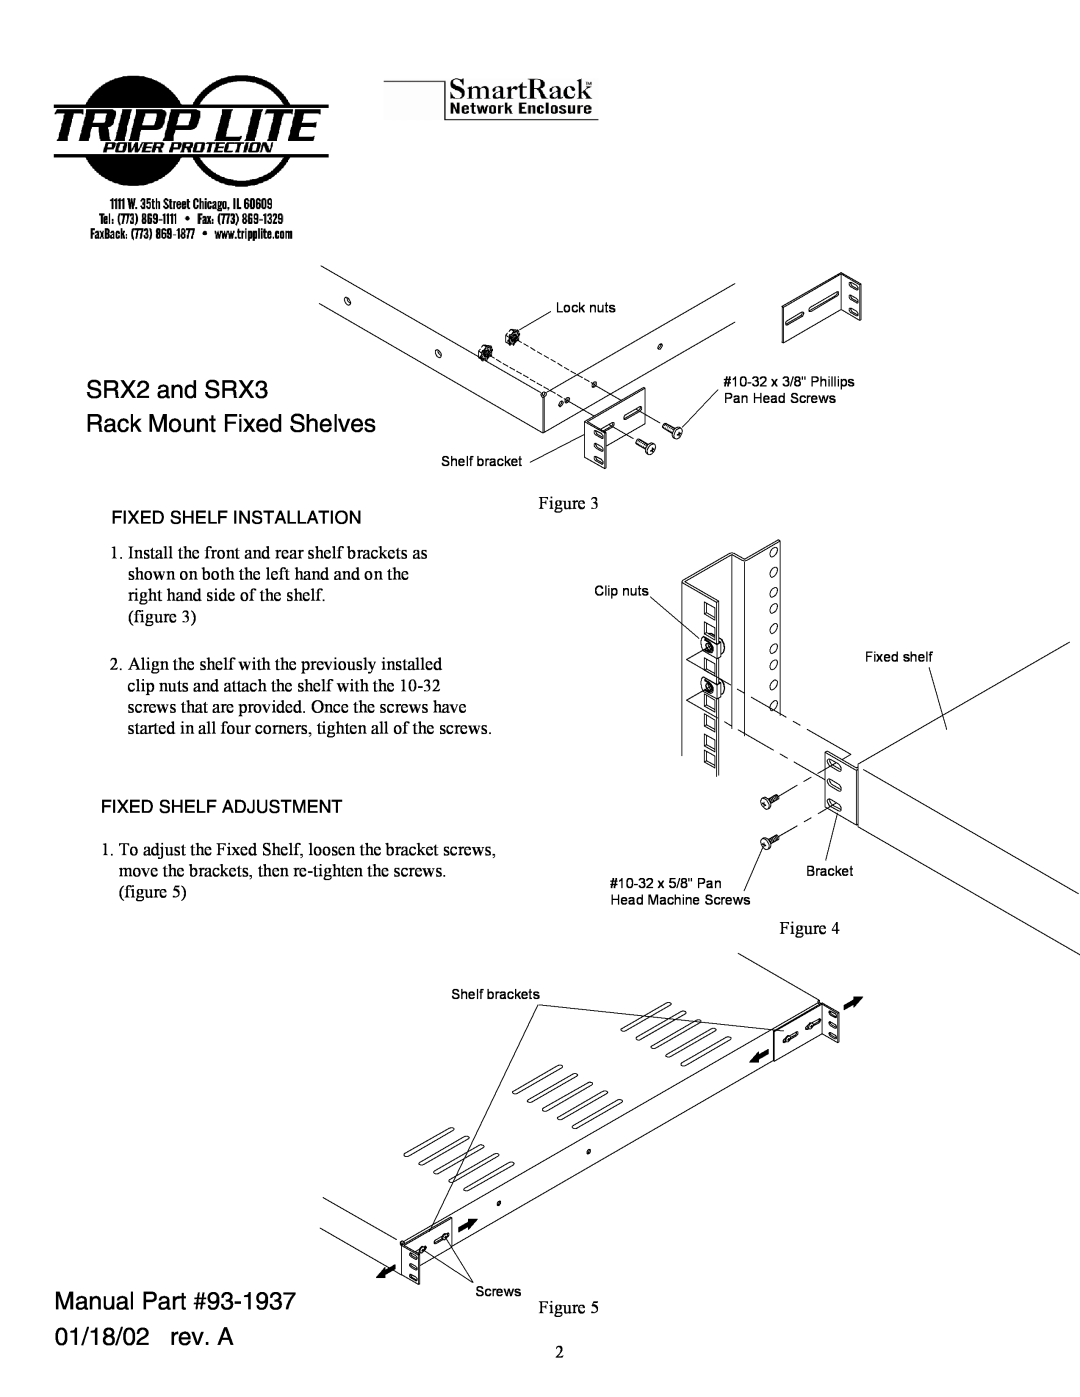 Tripp Lite SRX4 manual SRX2 and SRX3 Rack Mount Fixed Shelves, Manual 93-1937 01/18/02 rev. A, Fixed Shelf Installation 